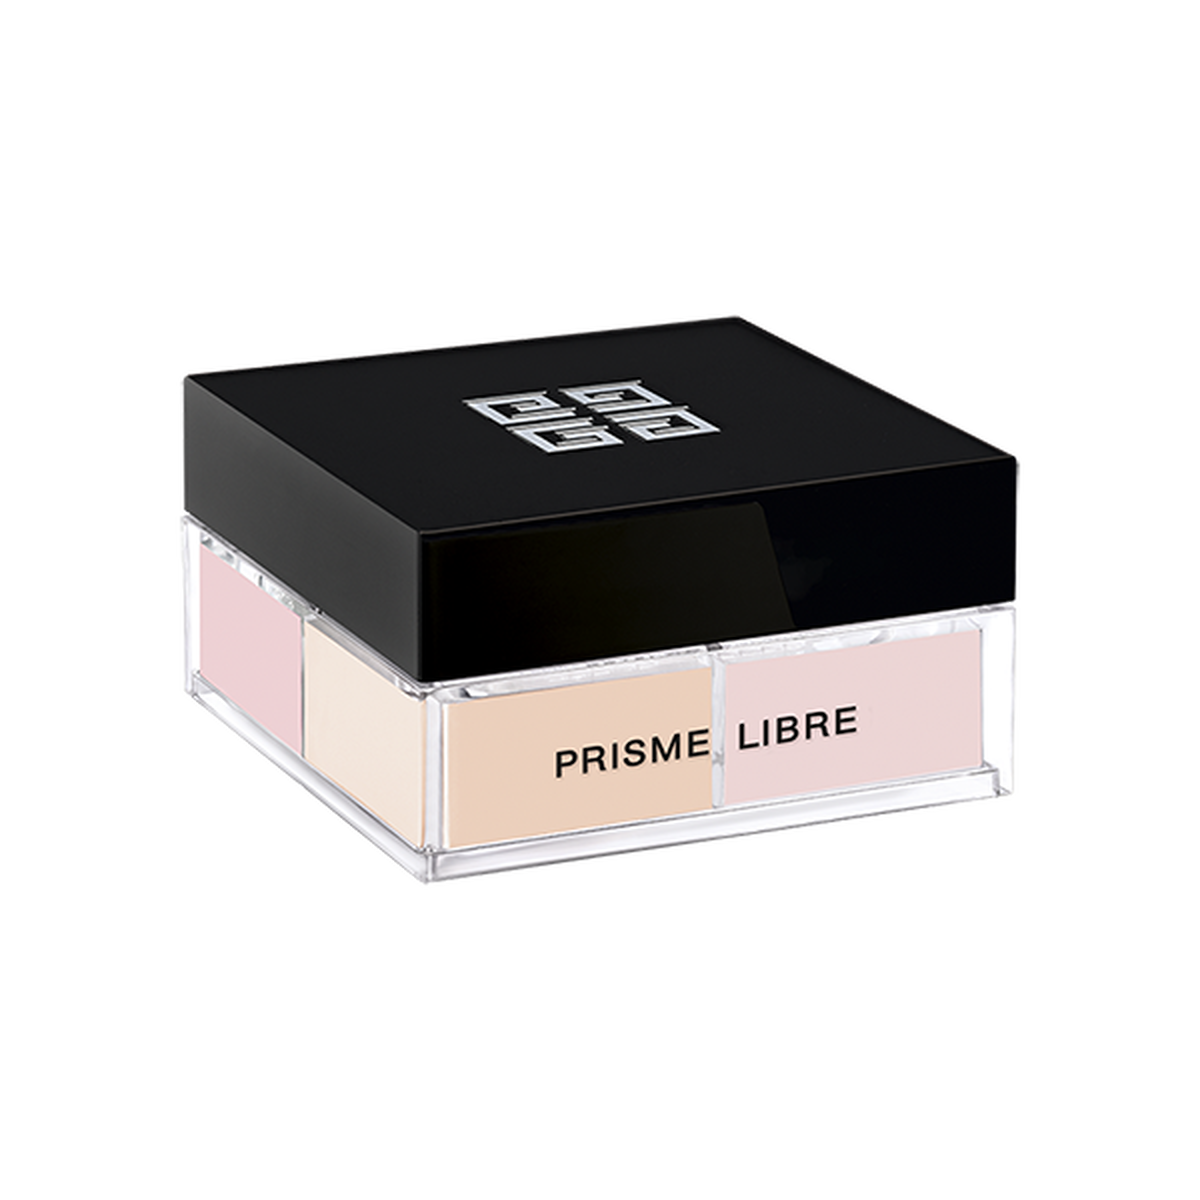 Phấn Phủ GIVENCHY Prisme Libre Mini Loose Powder #N03 Voile Rosé